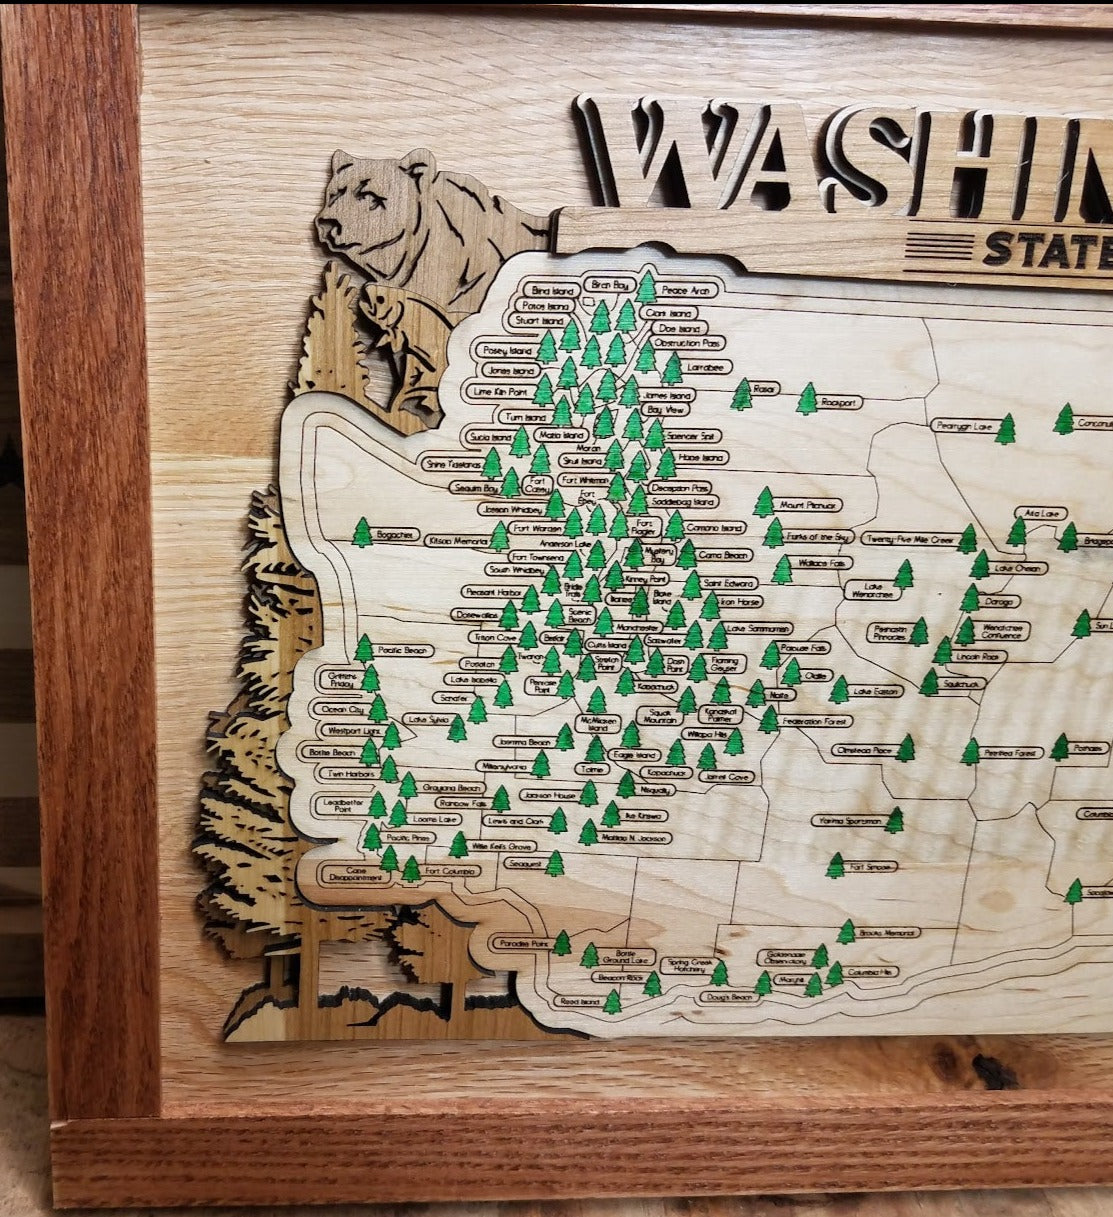 Washington State Park Explorer Map